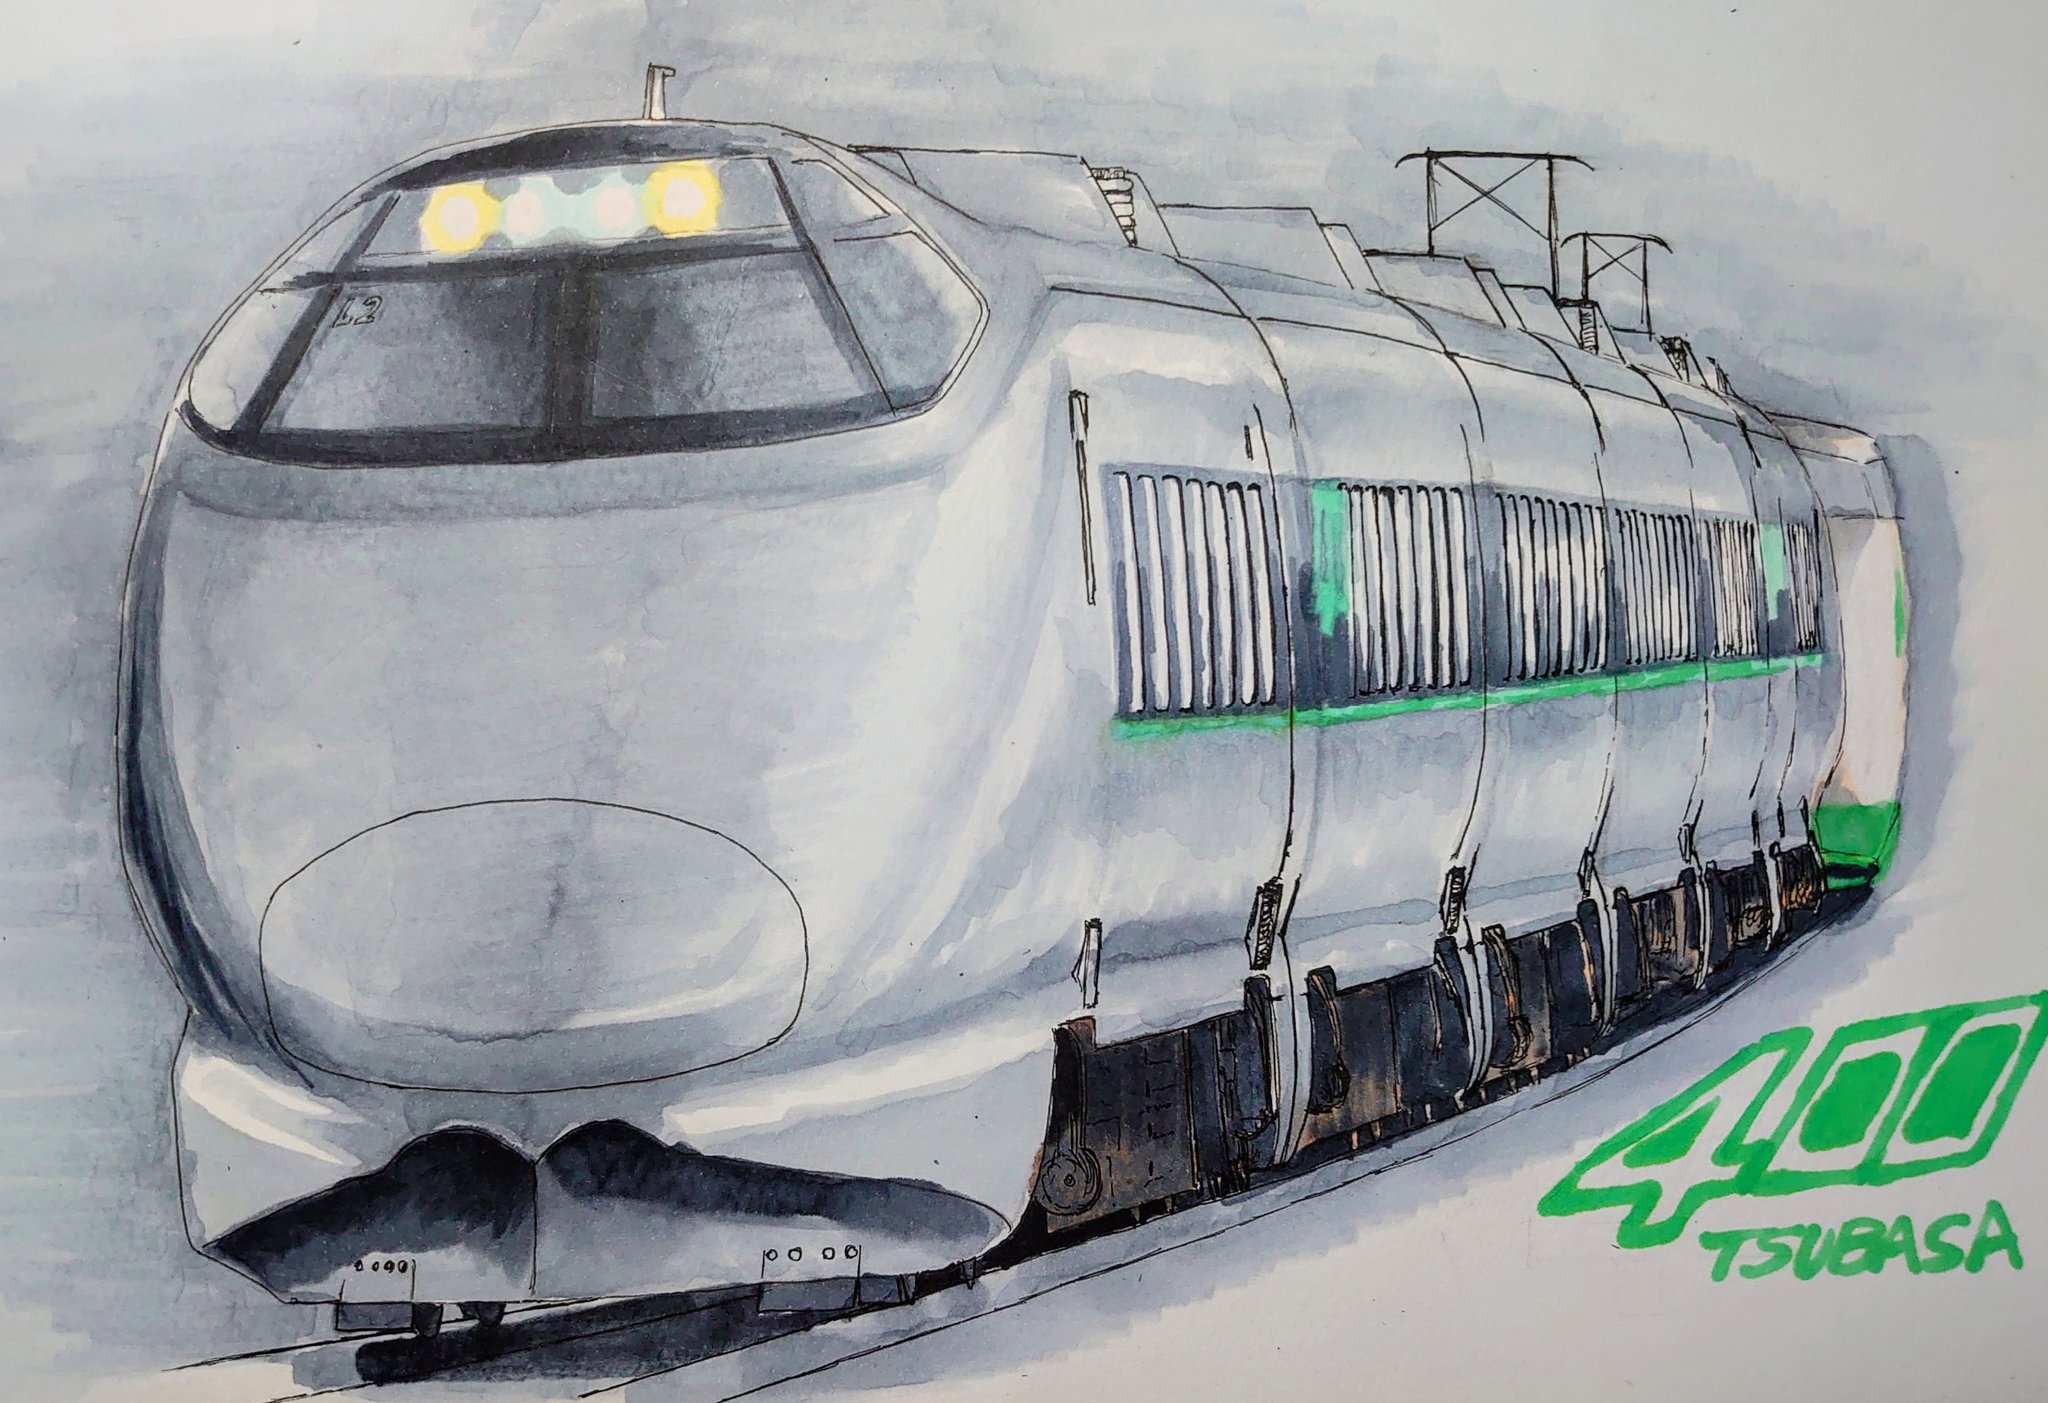 Twitter 上的 Ryota S 400系 つばさ 新幹線 山形新幹線 つばさ 400系 イラスト アナログ コピック T Co Iojagkz8q2 Twitter